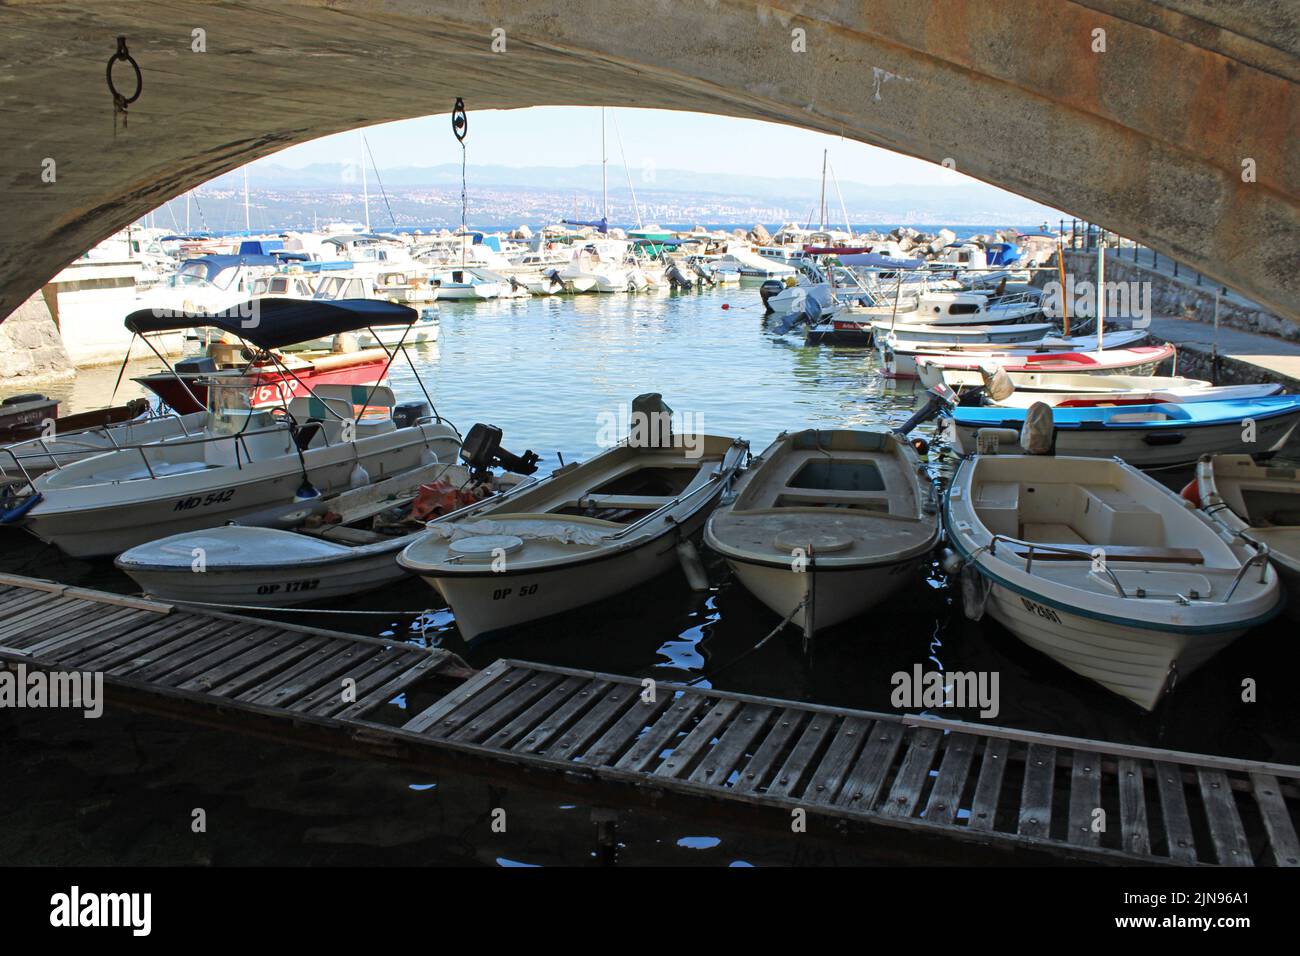 Famous landmarks, view from Ika's seaside promenade, central harbor vault, Adriatic coast, Kvarner bay, city details, Croatia Stock Photo